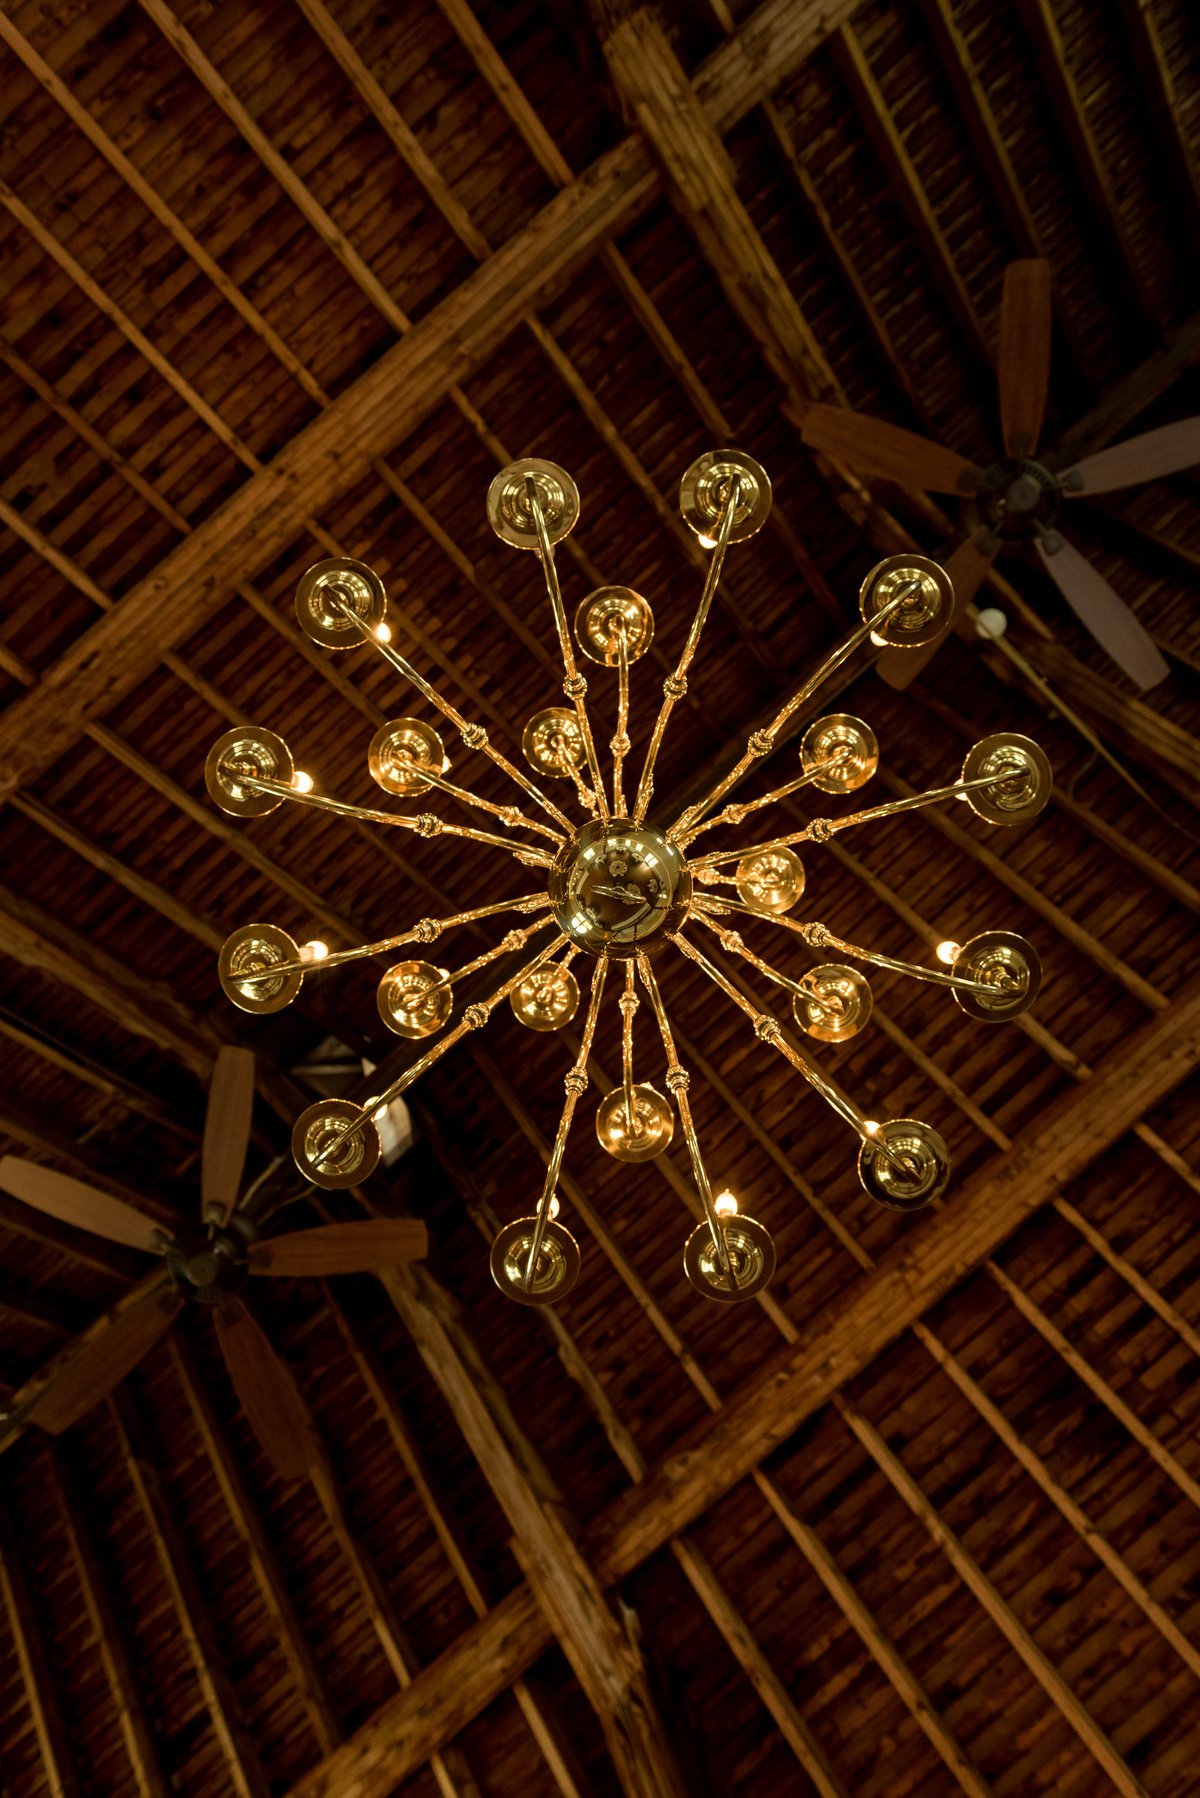 chandelier in rustic barn venue for wedding